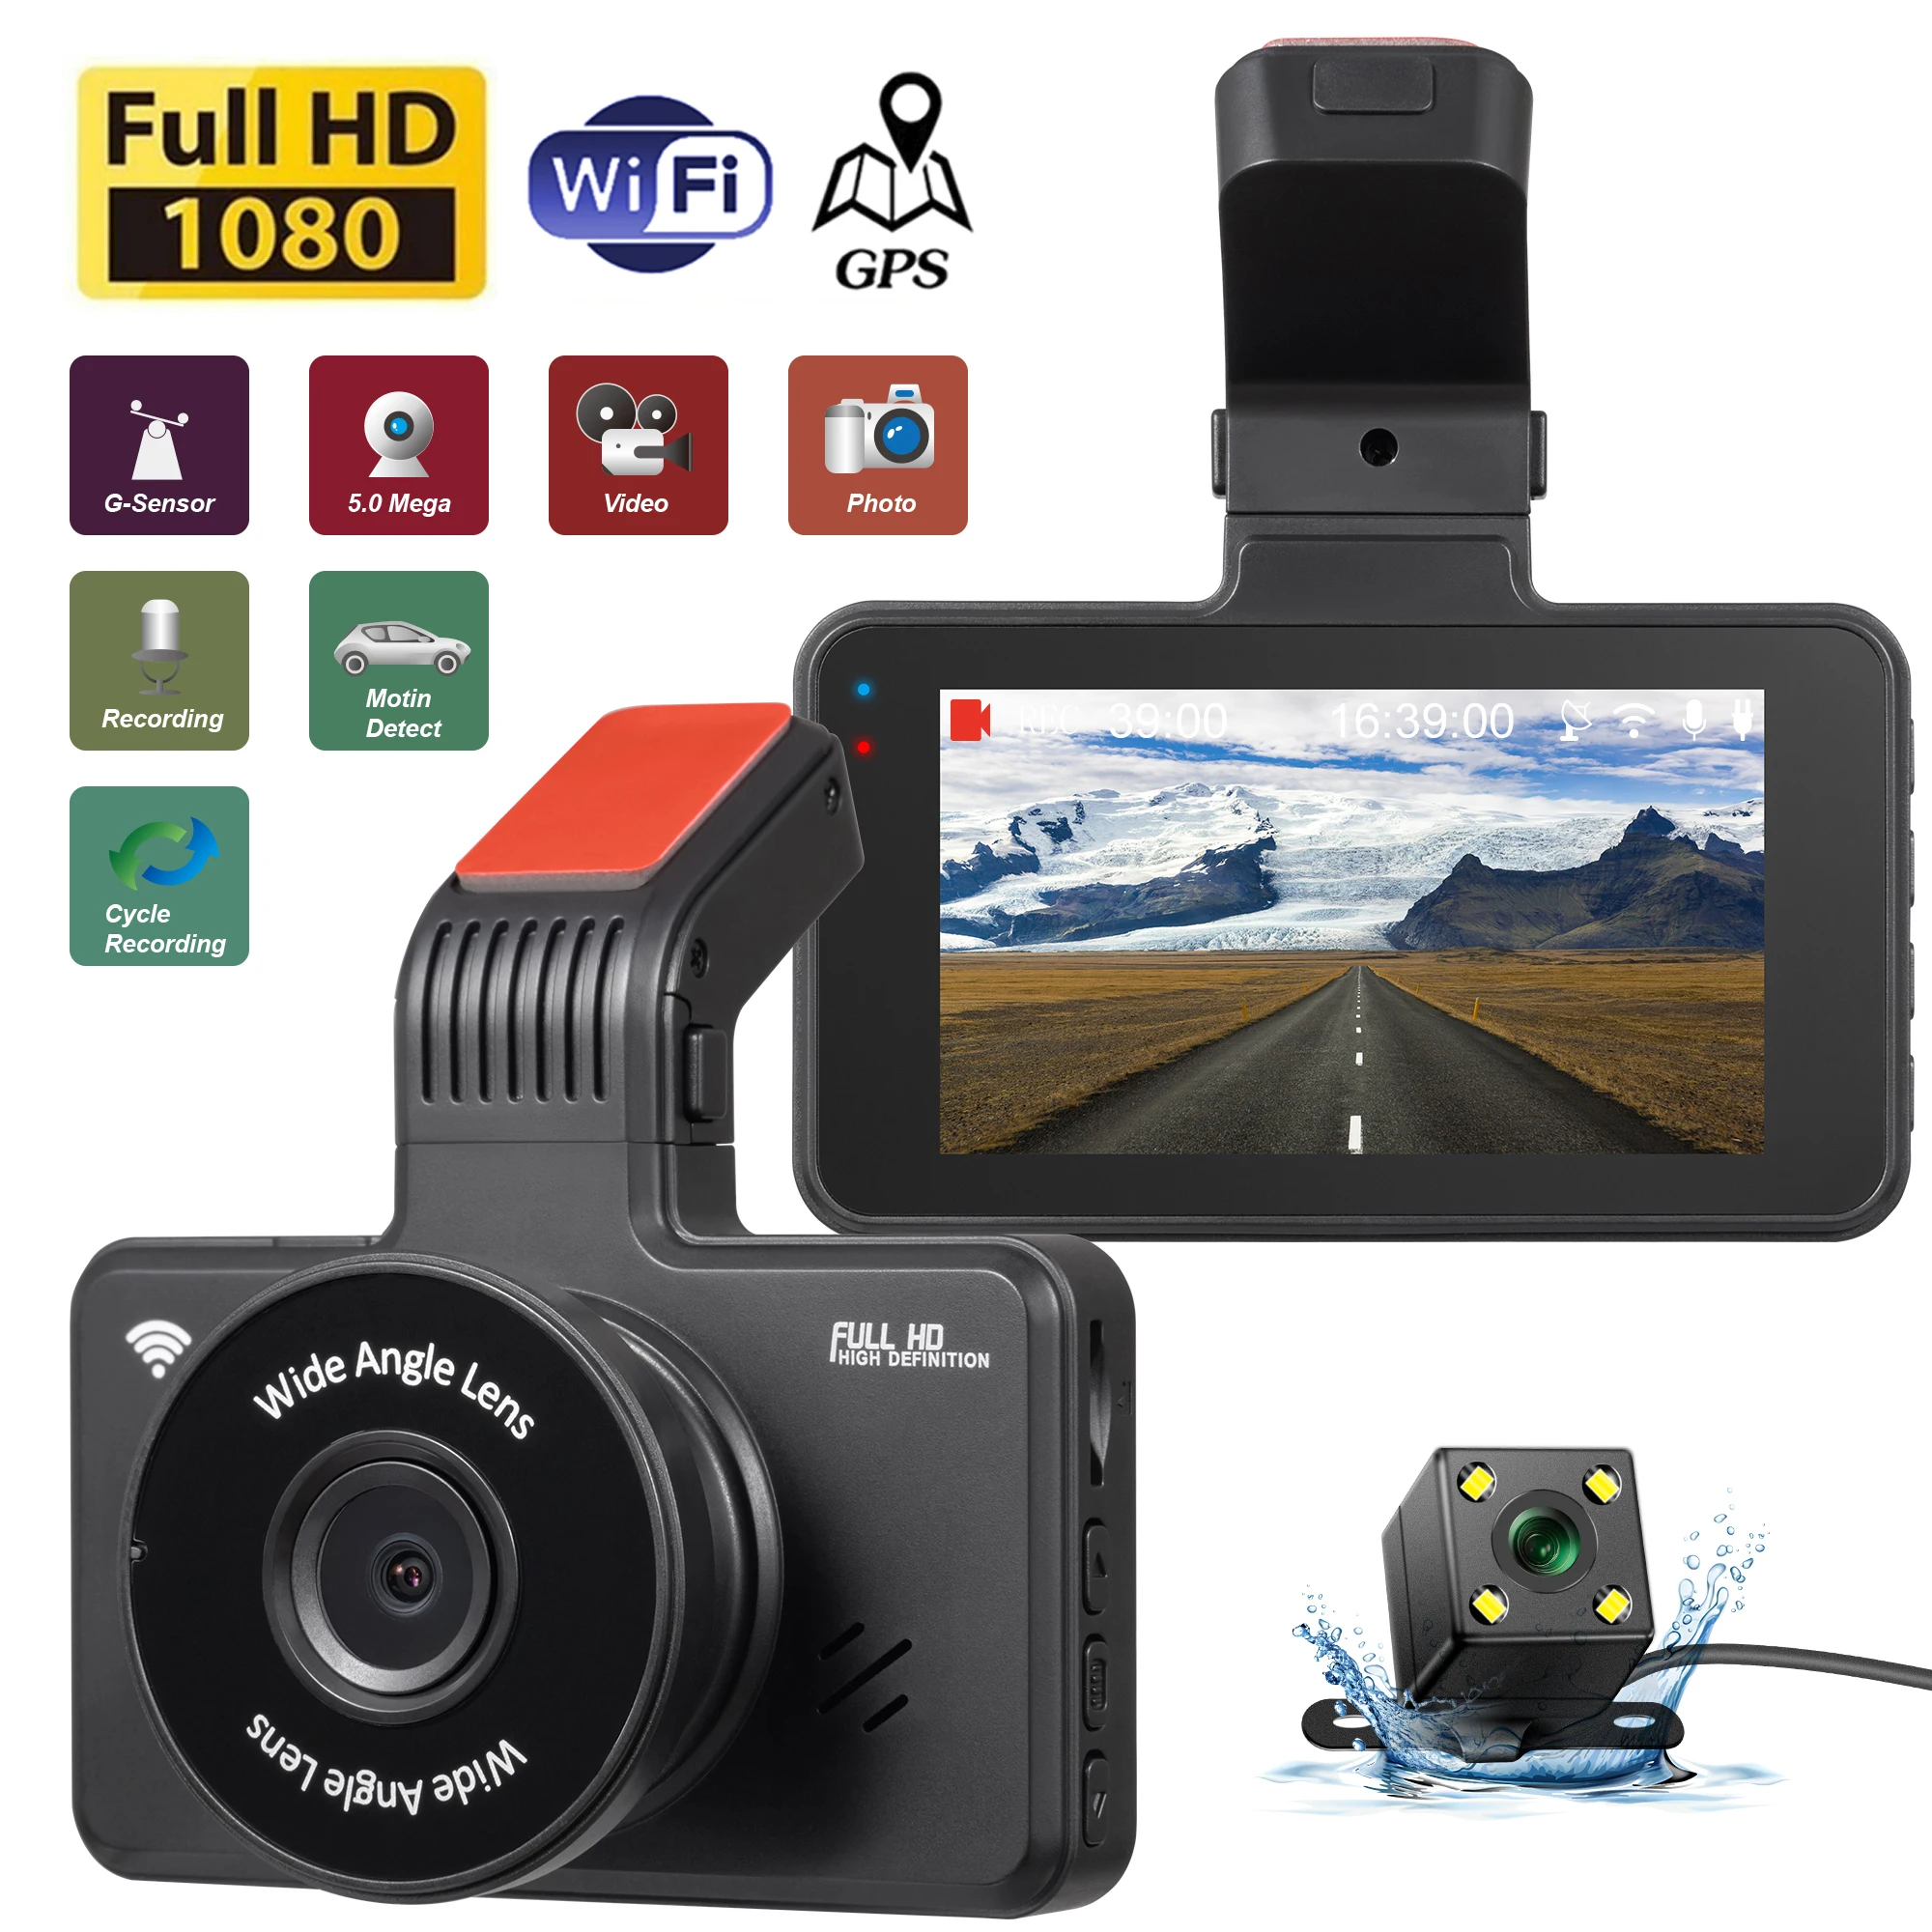 

Car DVR WiFi Full HD 1080P Dash Cam Vehicle Camera Drive Video Recorder Night Vision Auto Dashcam GPS Registrar Car Accessories